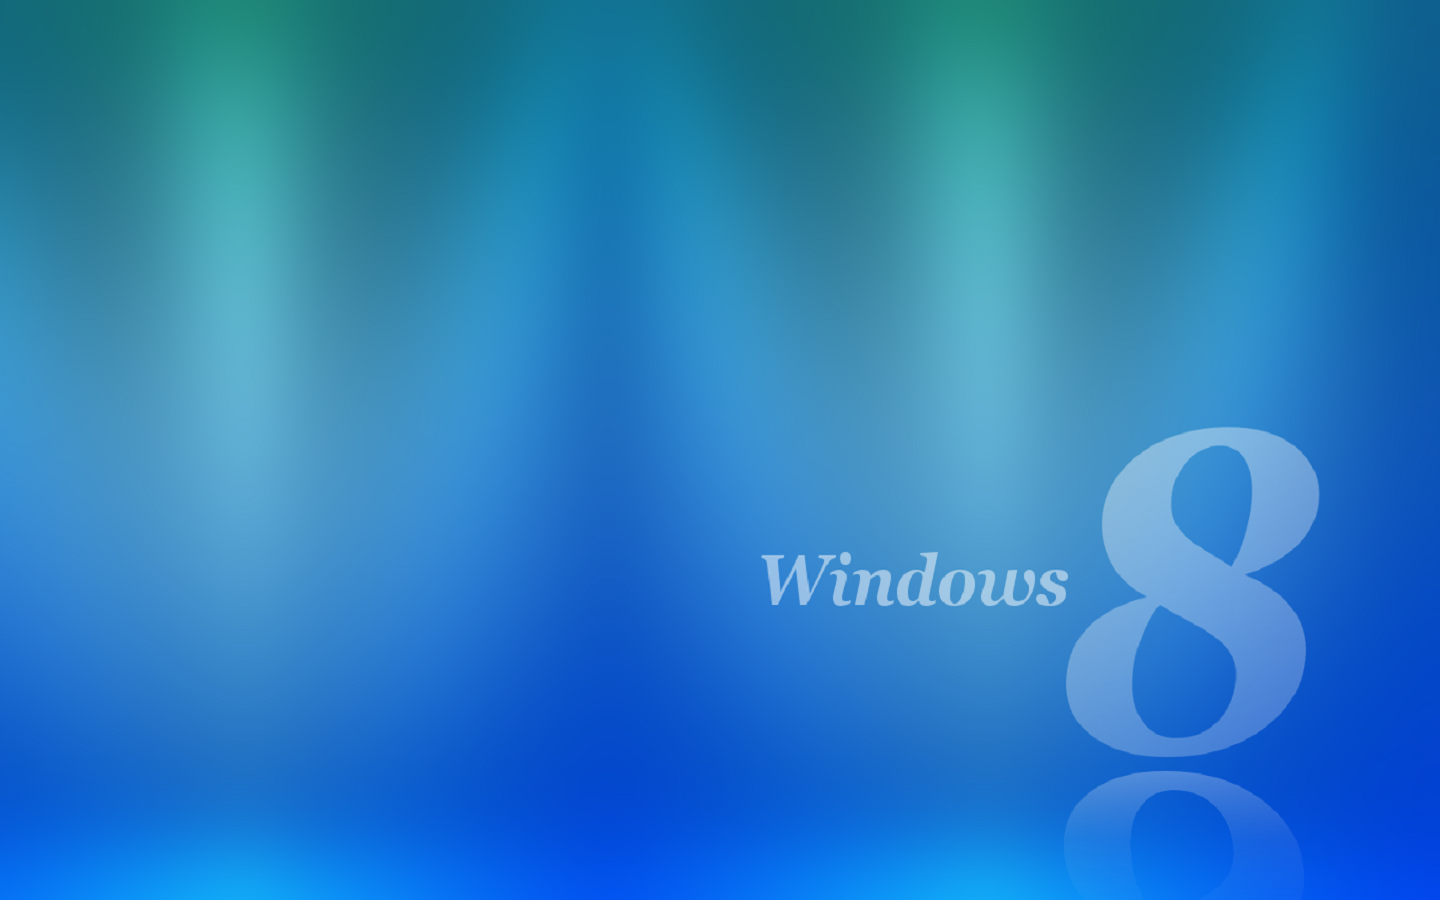 Windows WallpaperWindows 8 Wallpapers